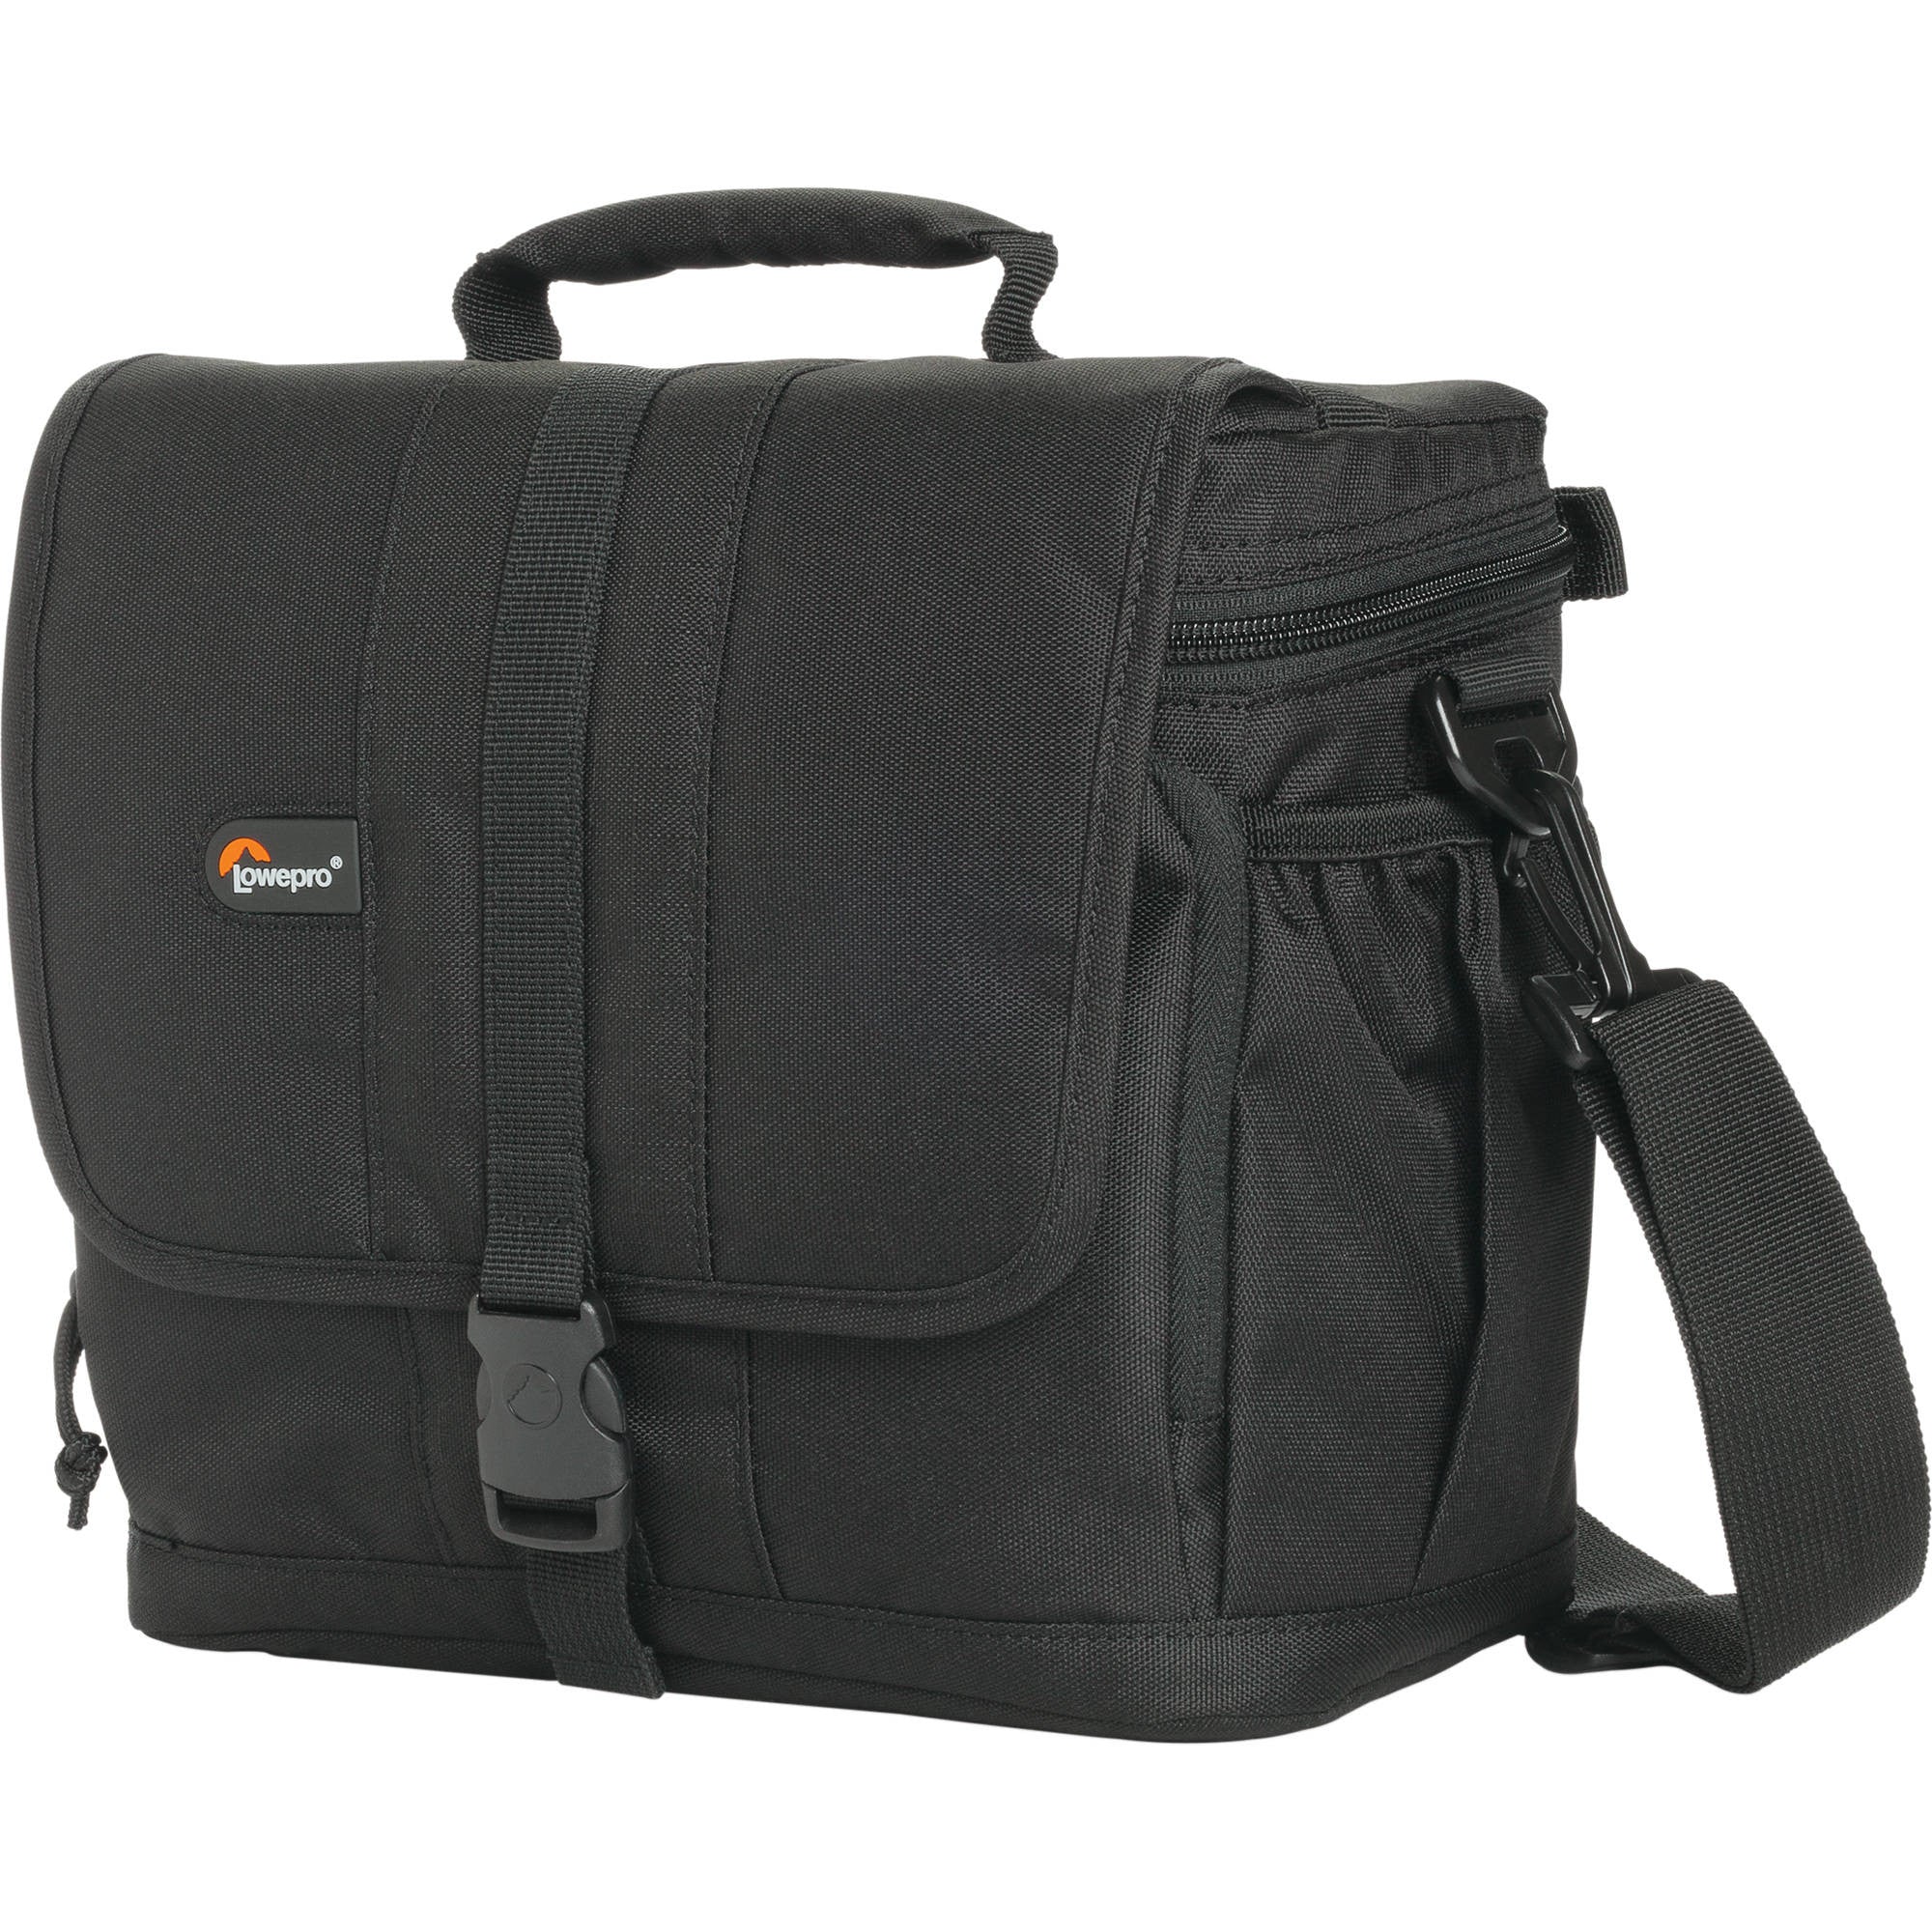 Lowepro Adventura 170 (Black), bags shoulder bags, Lowepro - Pictureline  - 3